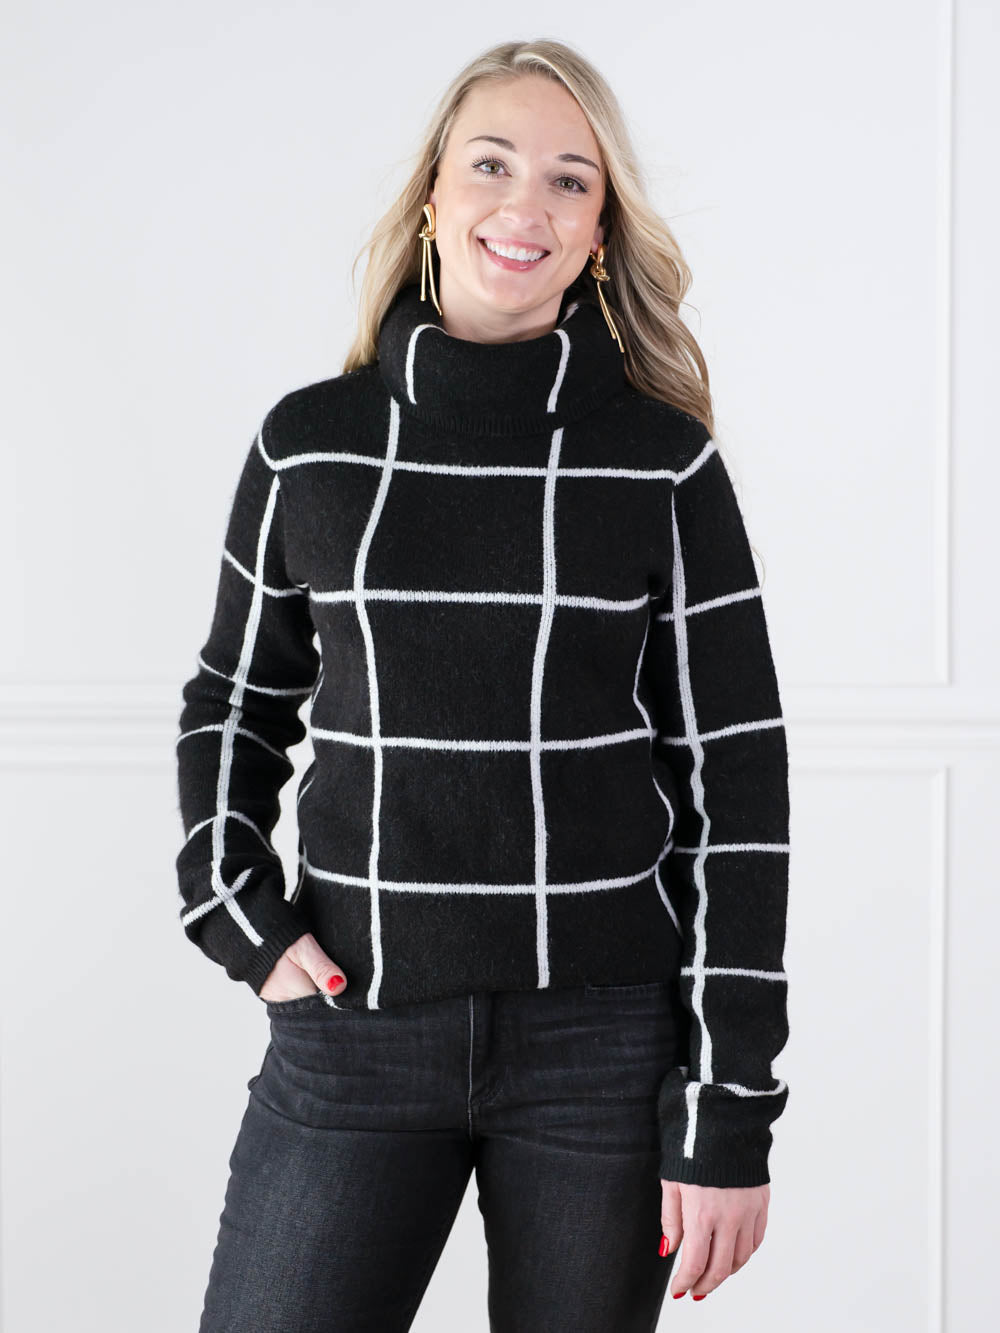 Windowpane Plaid Sweater for Tall Women